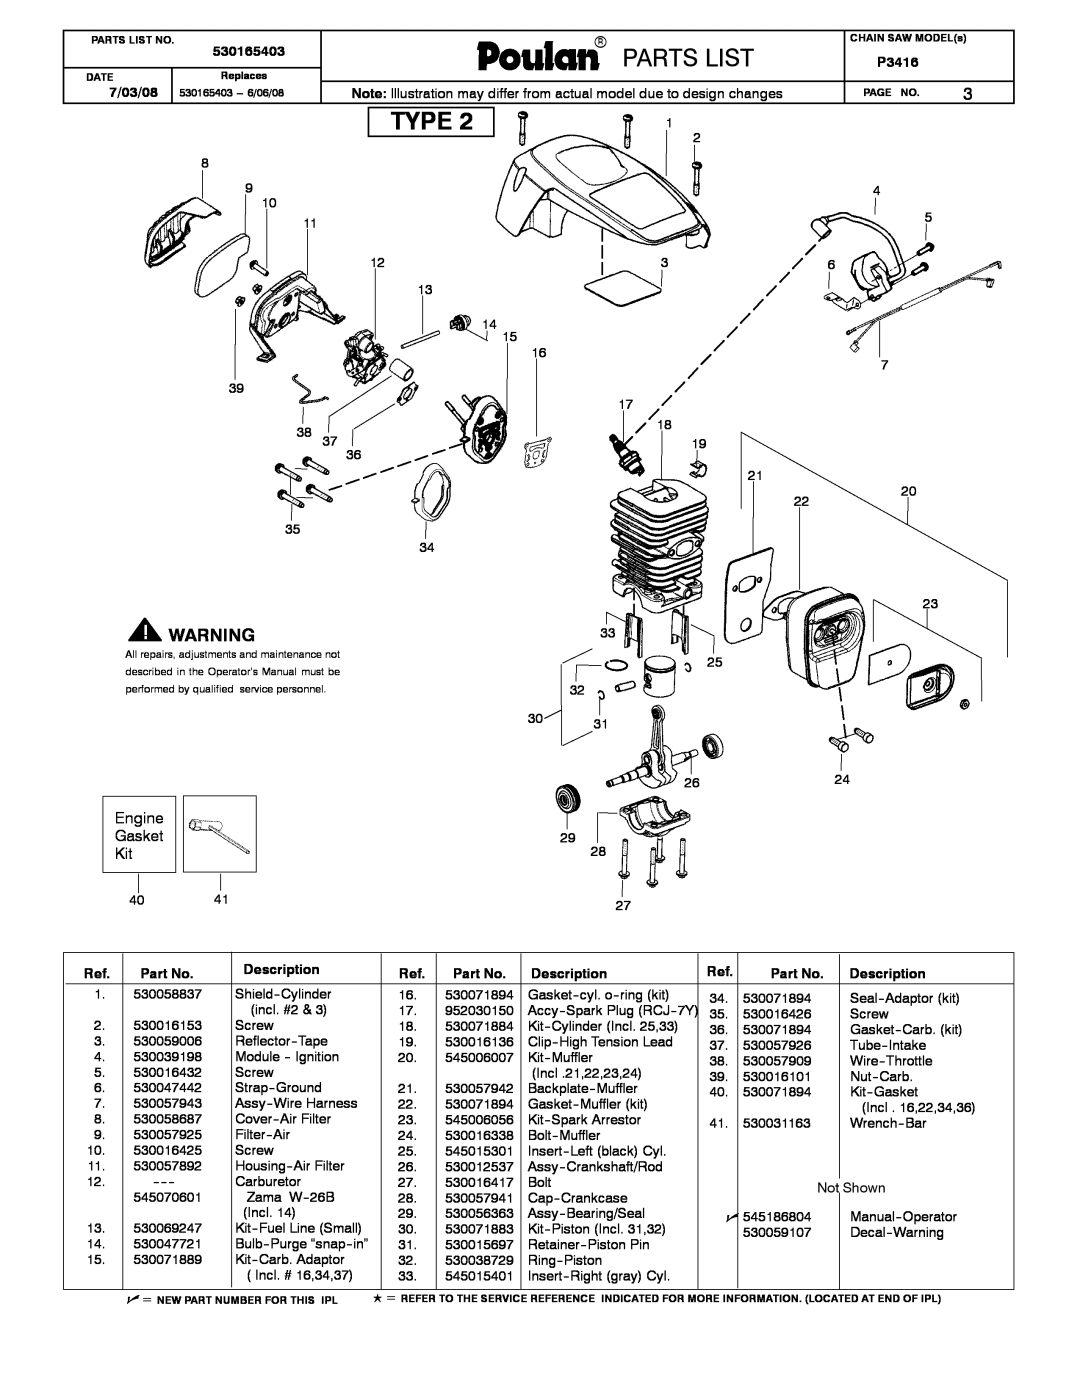 Poulan 530165403 manual WEED EATERRr, Partslist, Type, Paramoupoulant, Engine Gasket Kit, P3416, Description 